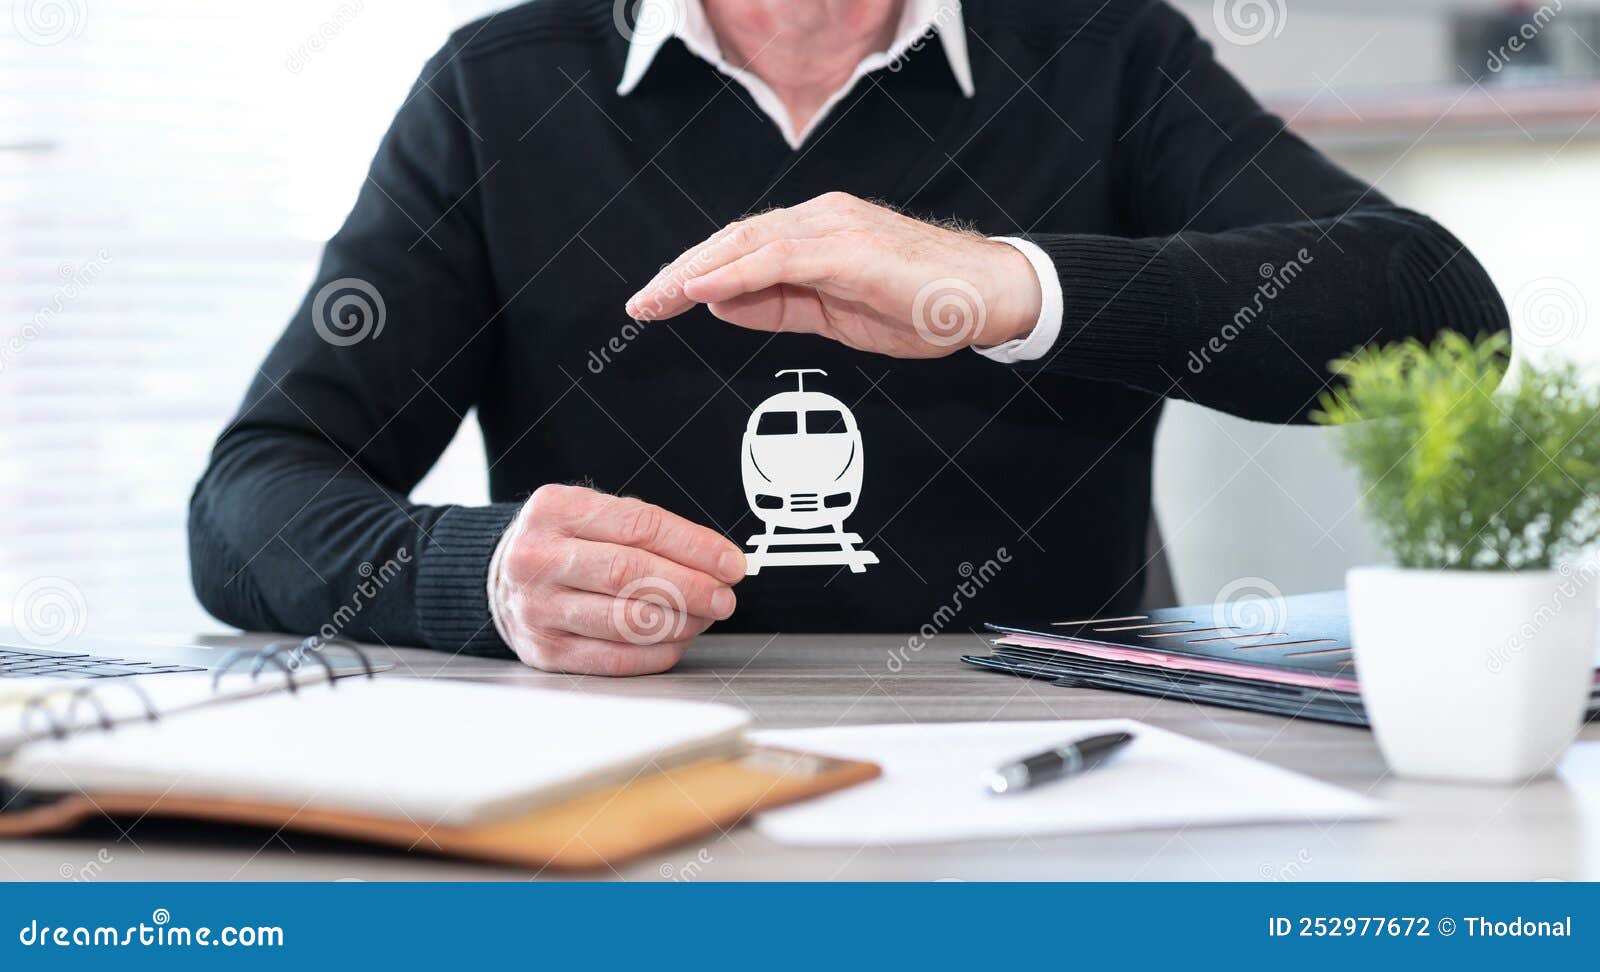 travel insurance of train